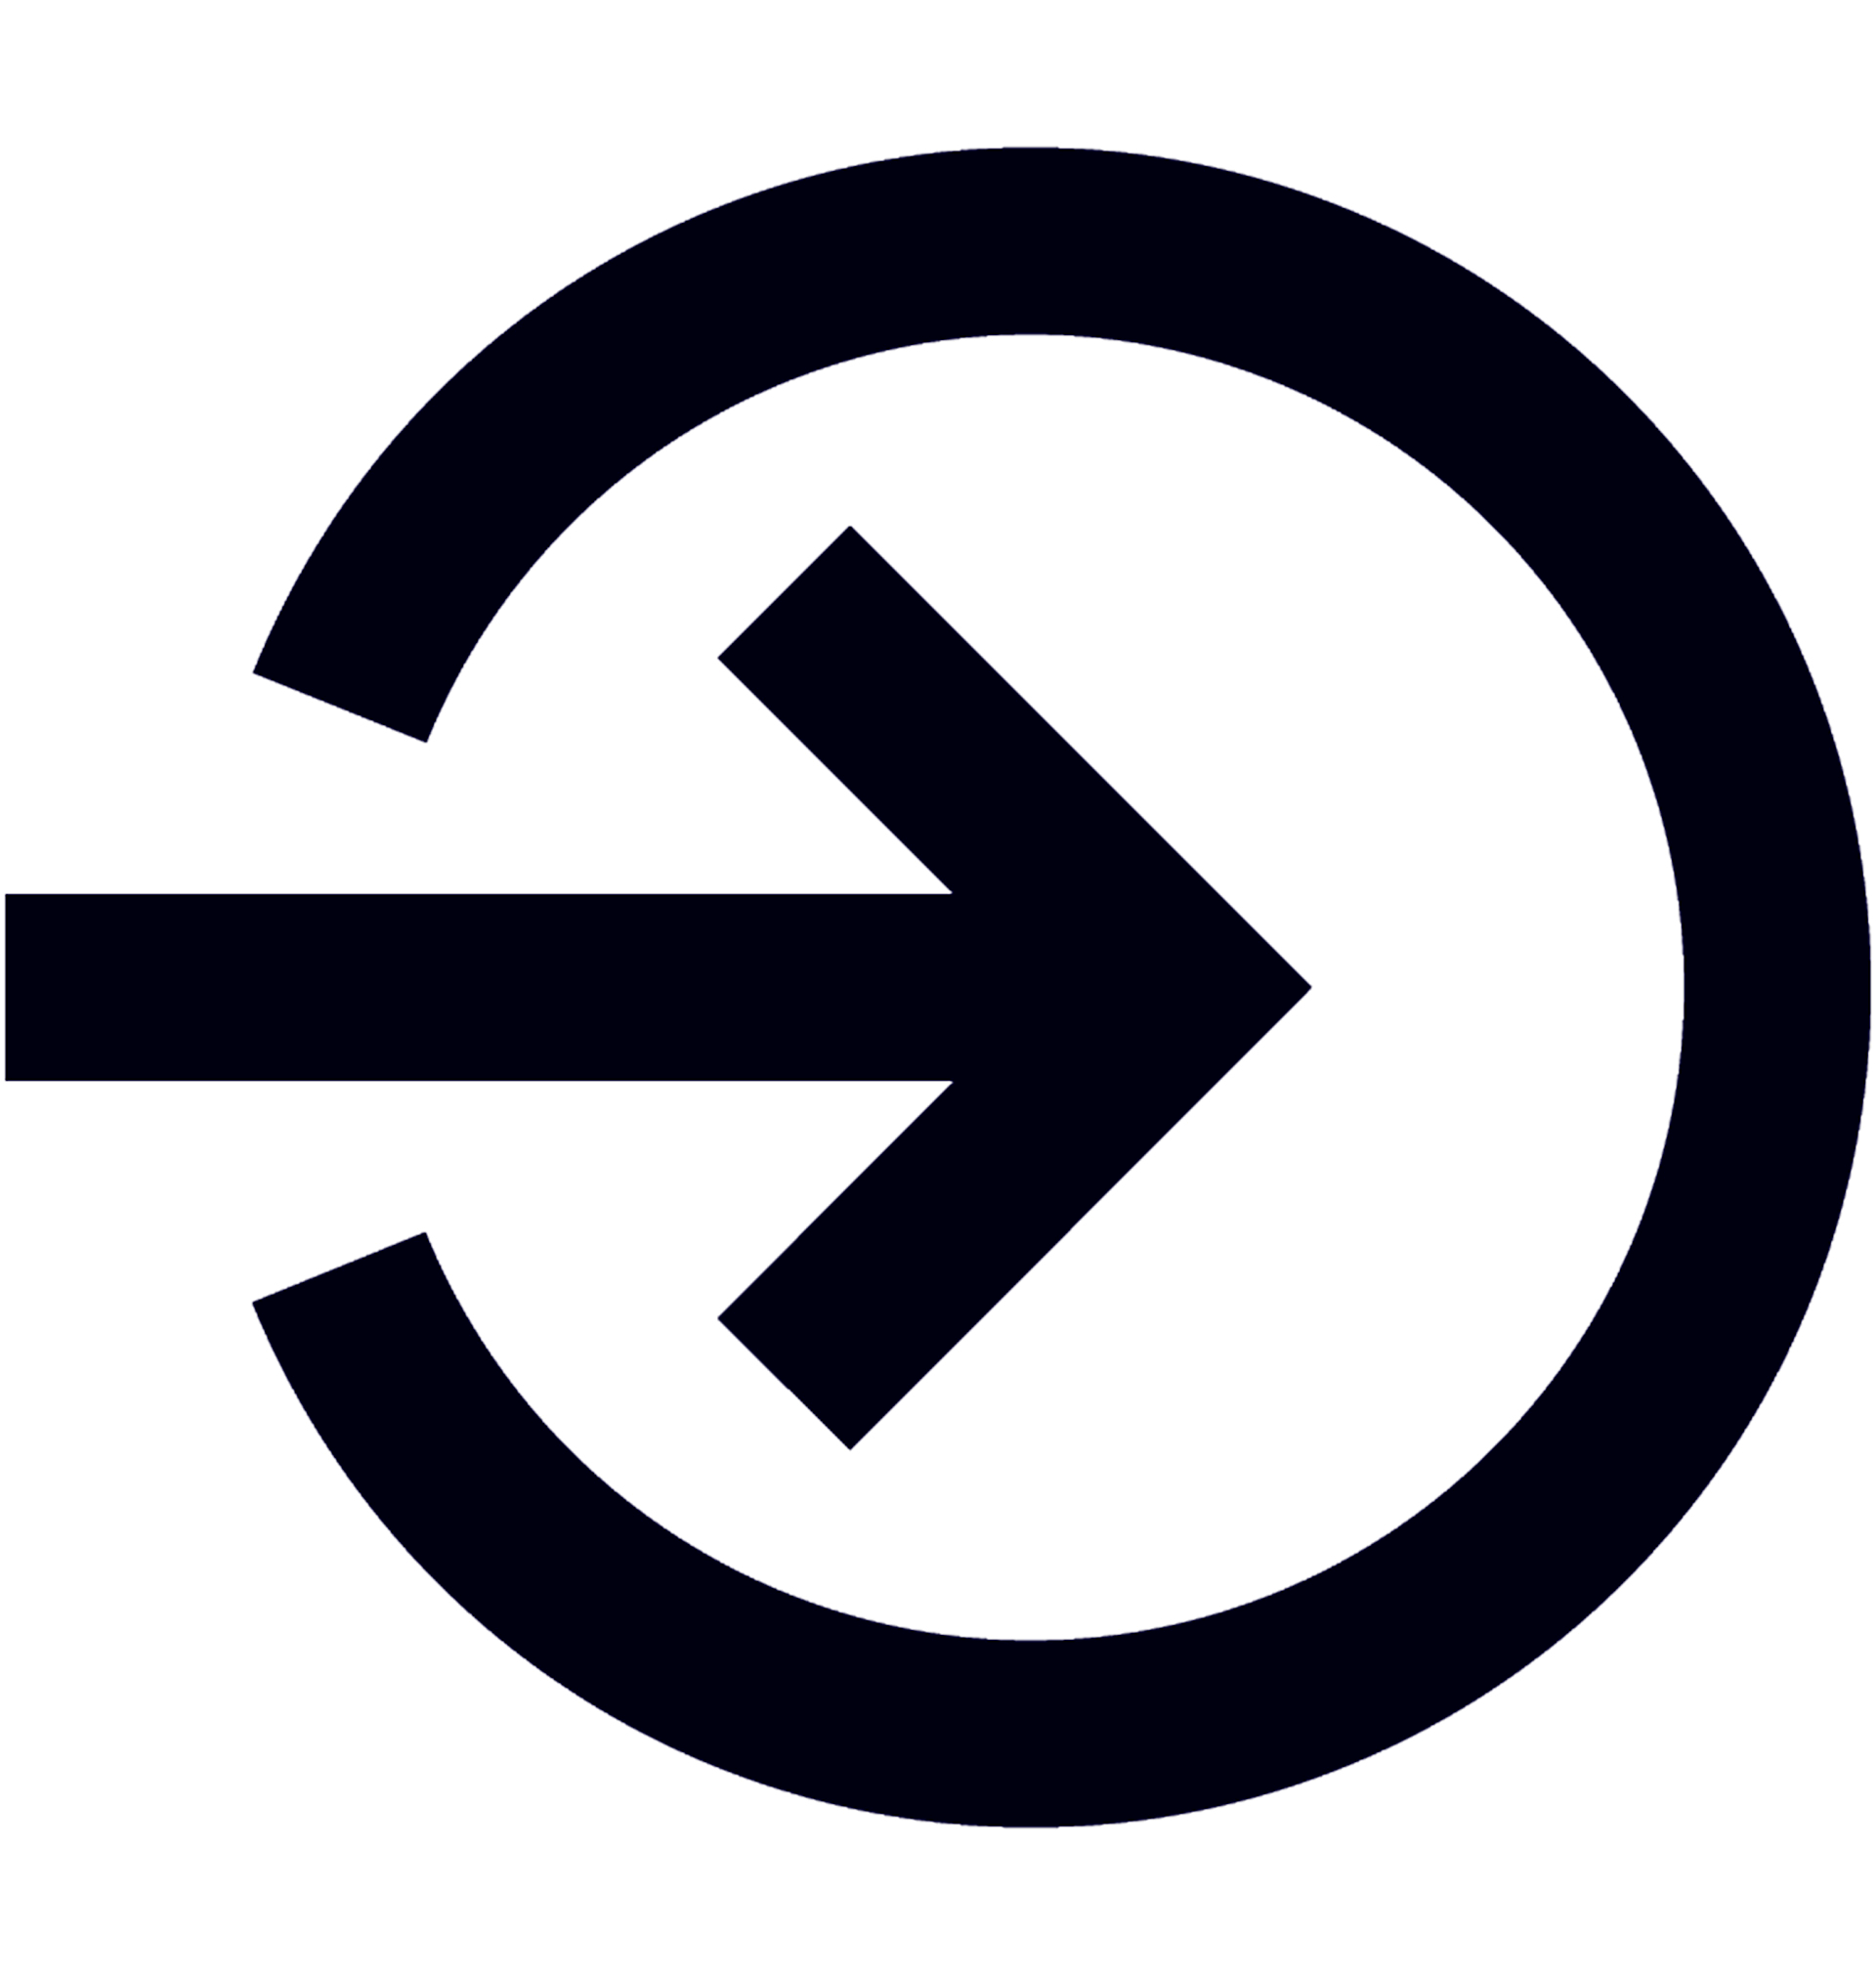 Direct access icon